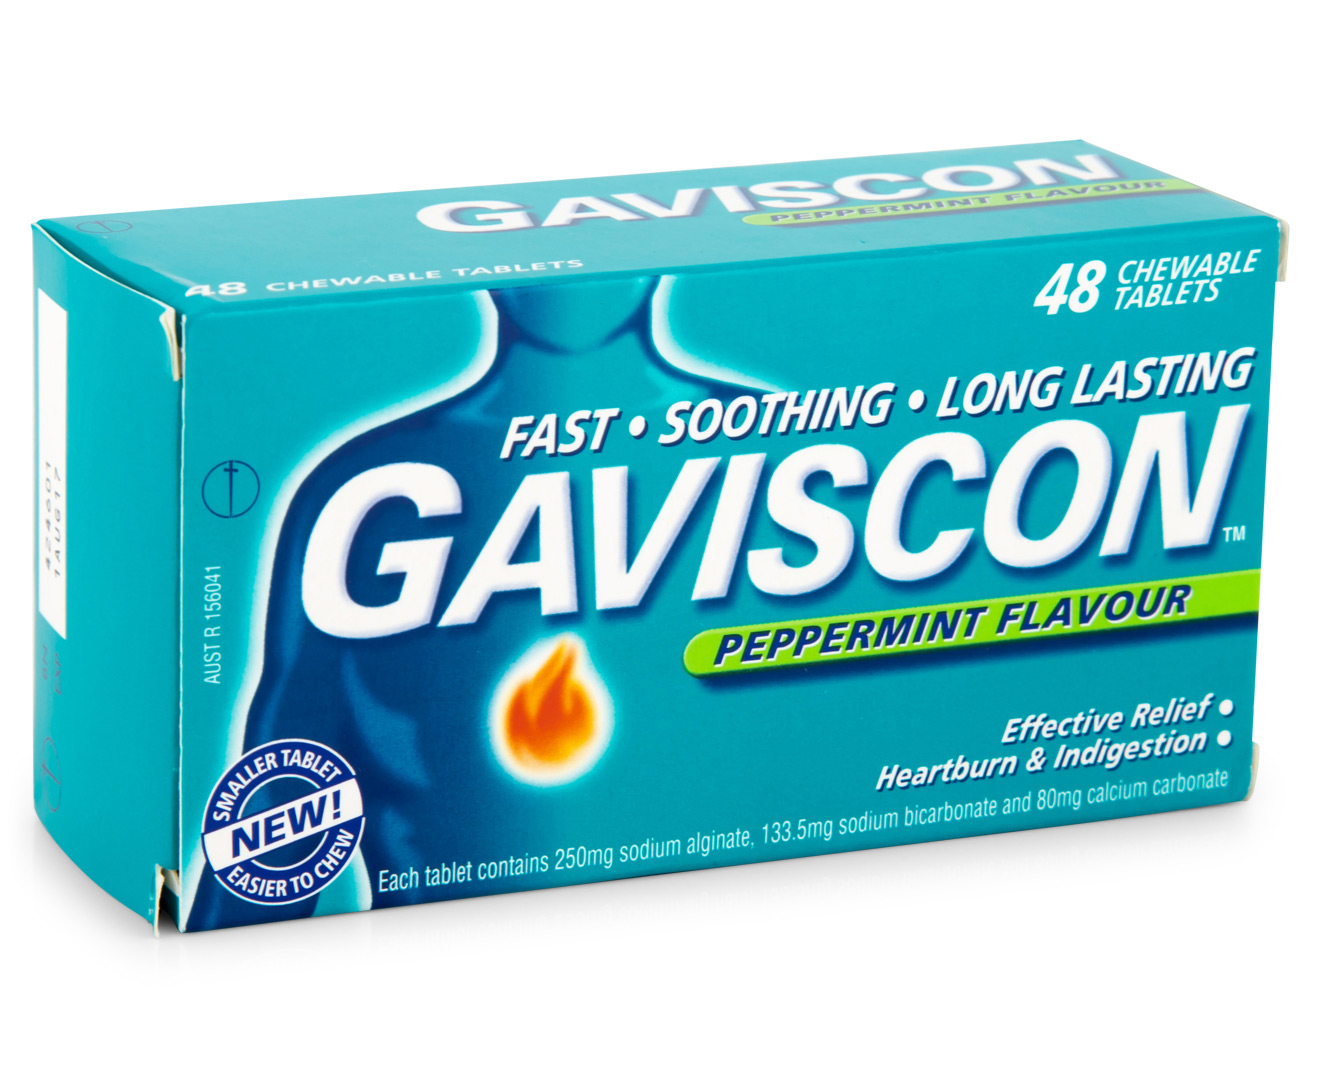 Gaviscon Chewable Tablets Peppermint 48pk Scoopon Shopping.